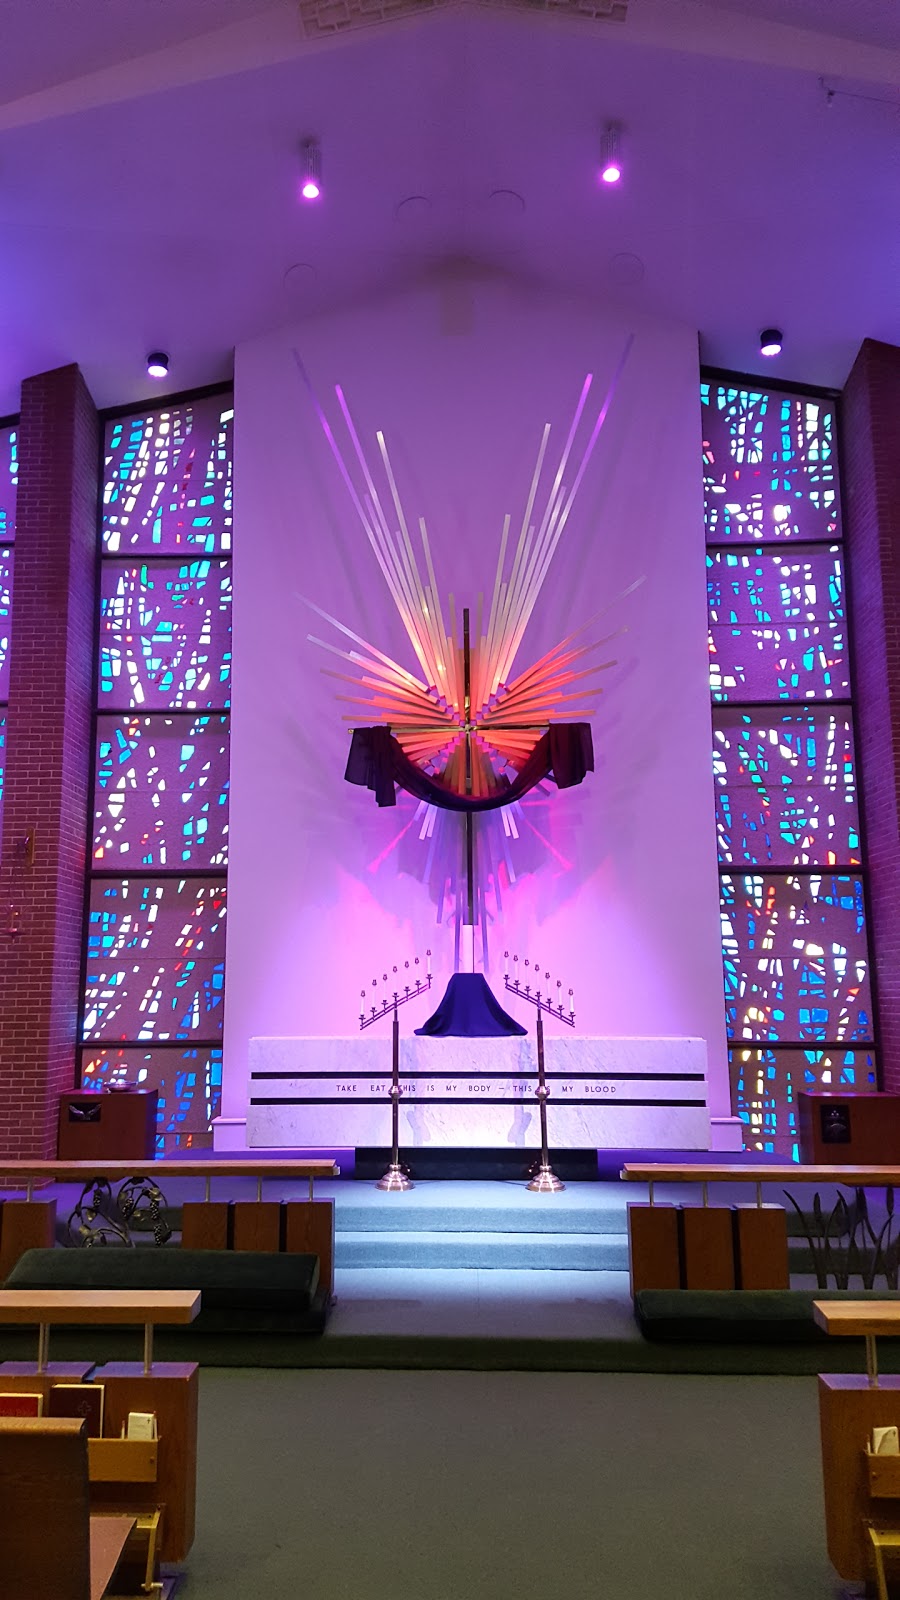 Guardian Lutheran Church | 24544 Cherry Hill St, Dearborn, MI 48124, USA | Phone: (313) 274-1414